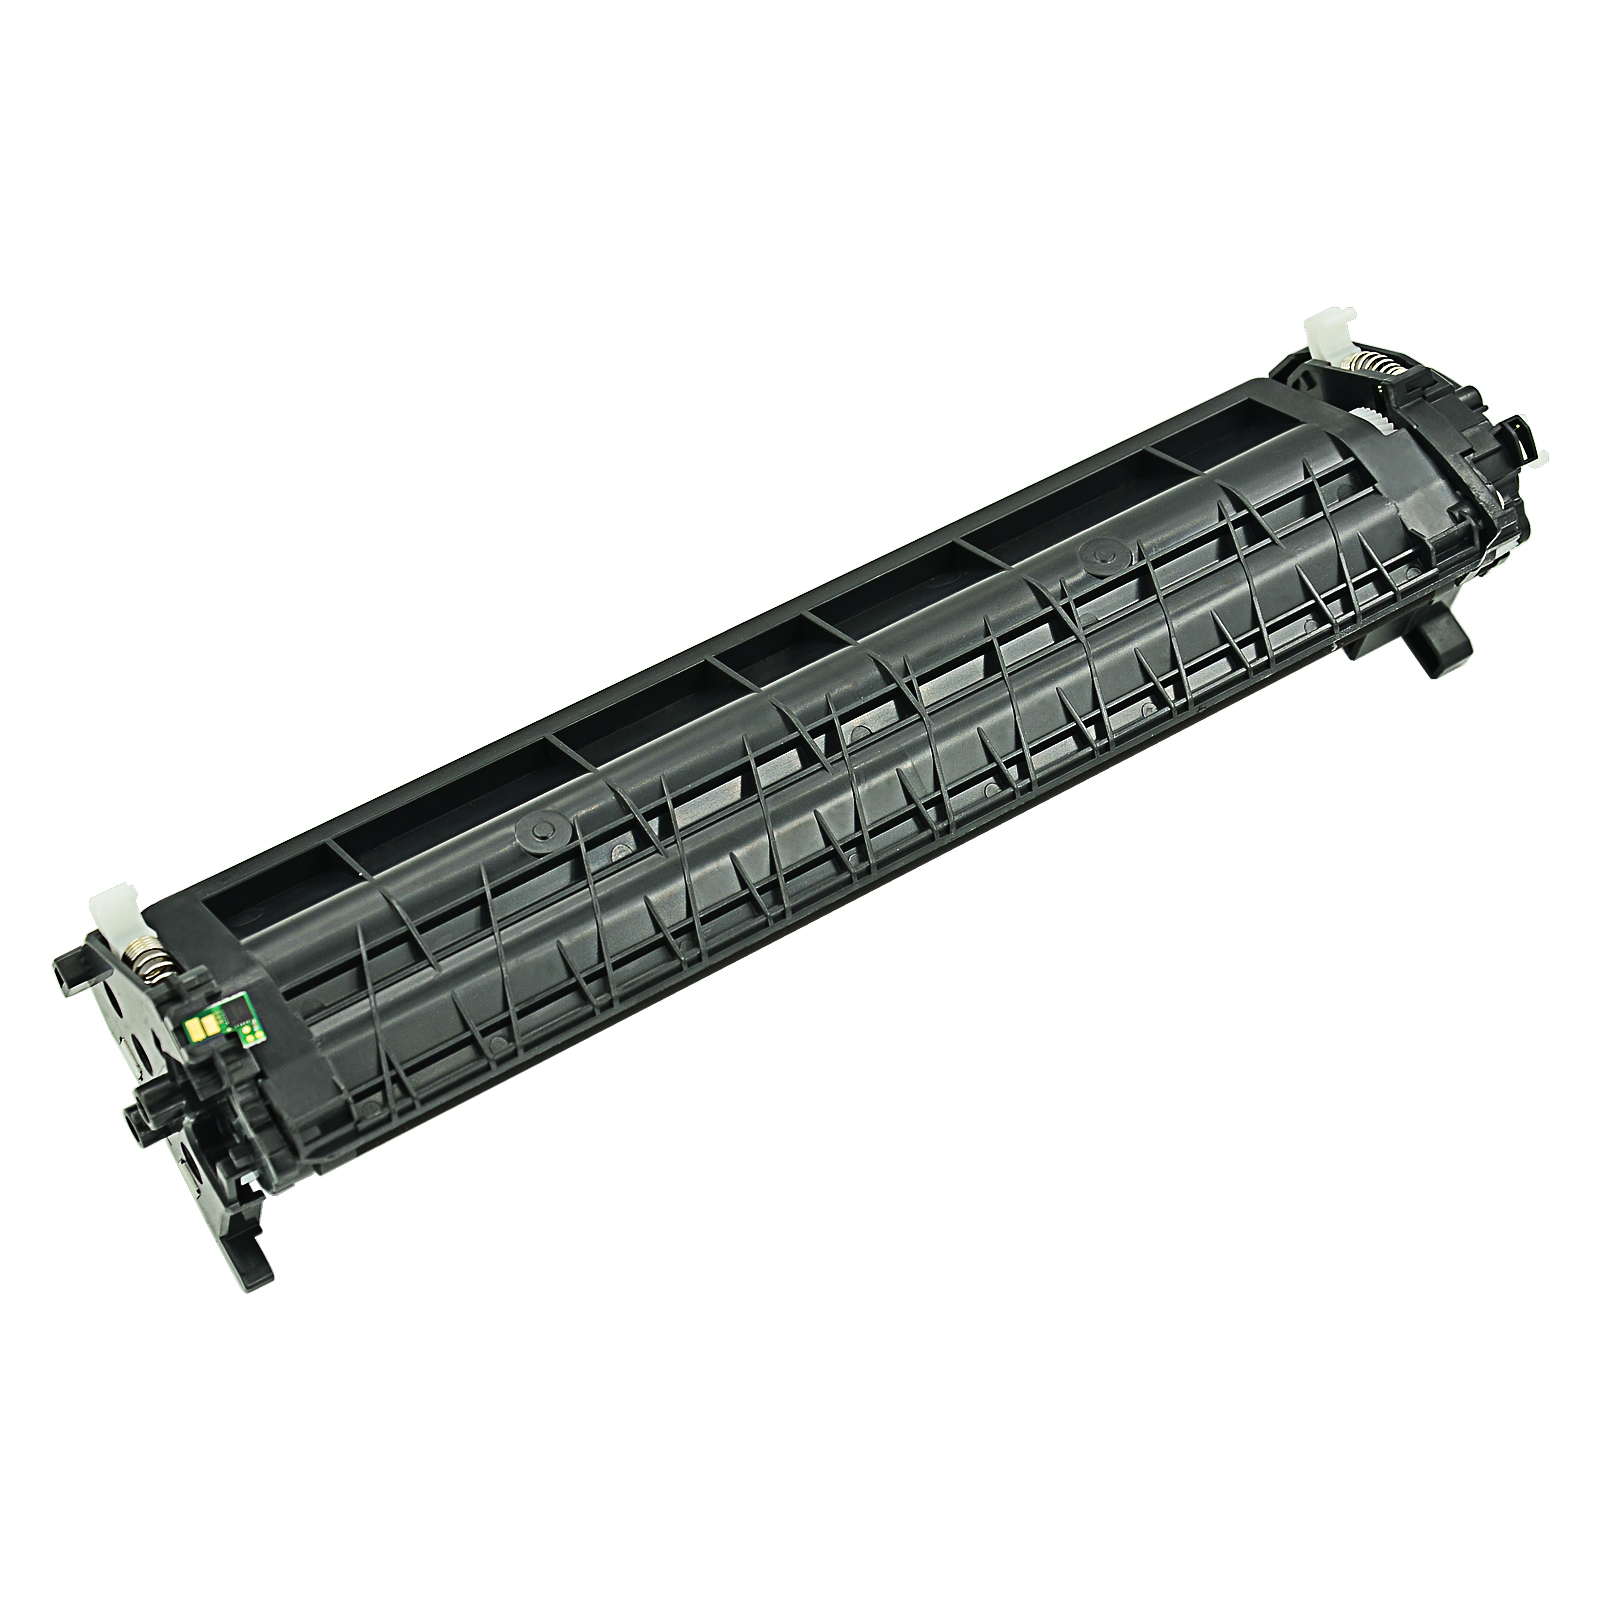 GREENCYCLE 10 Pack High Yield Compatible 30X CF230X Black Toner Cartridge for HP Laserjet Pro M203d MFP M227d M227fdn M227fdw